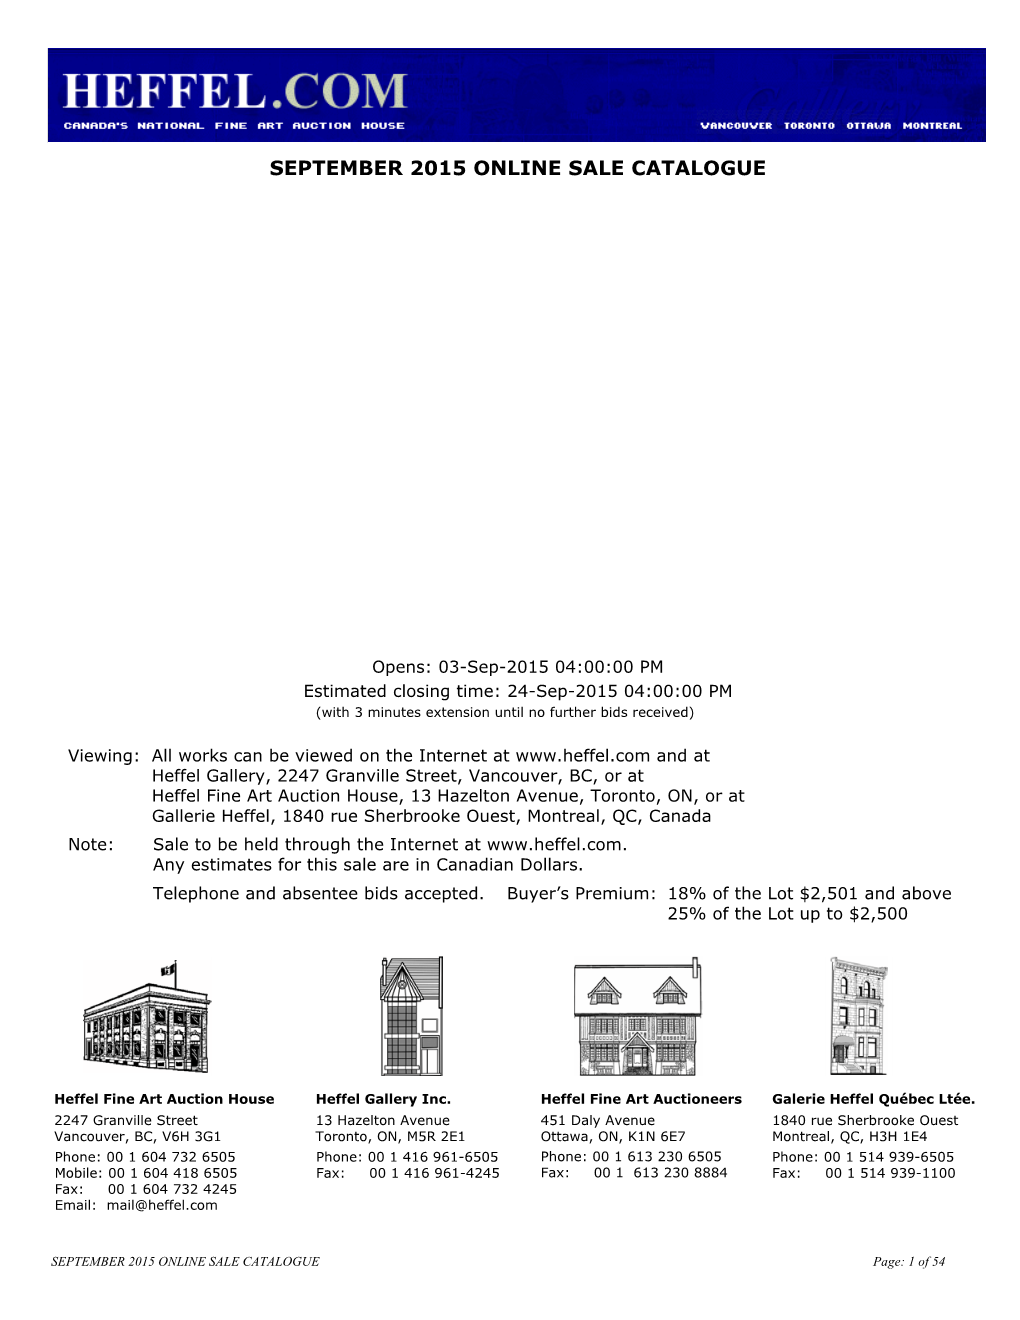 September 2015 Online Sale Catalogue